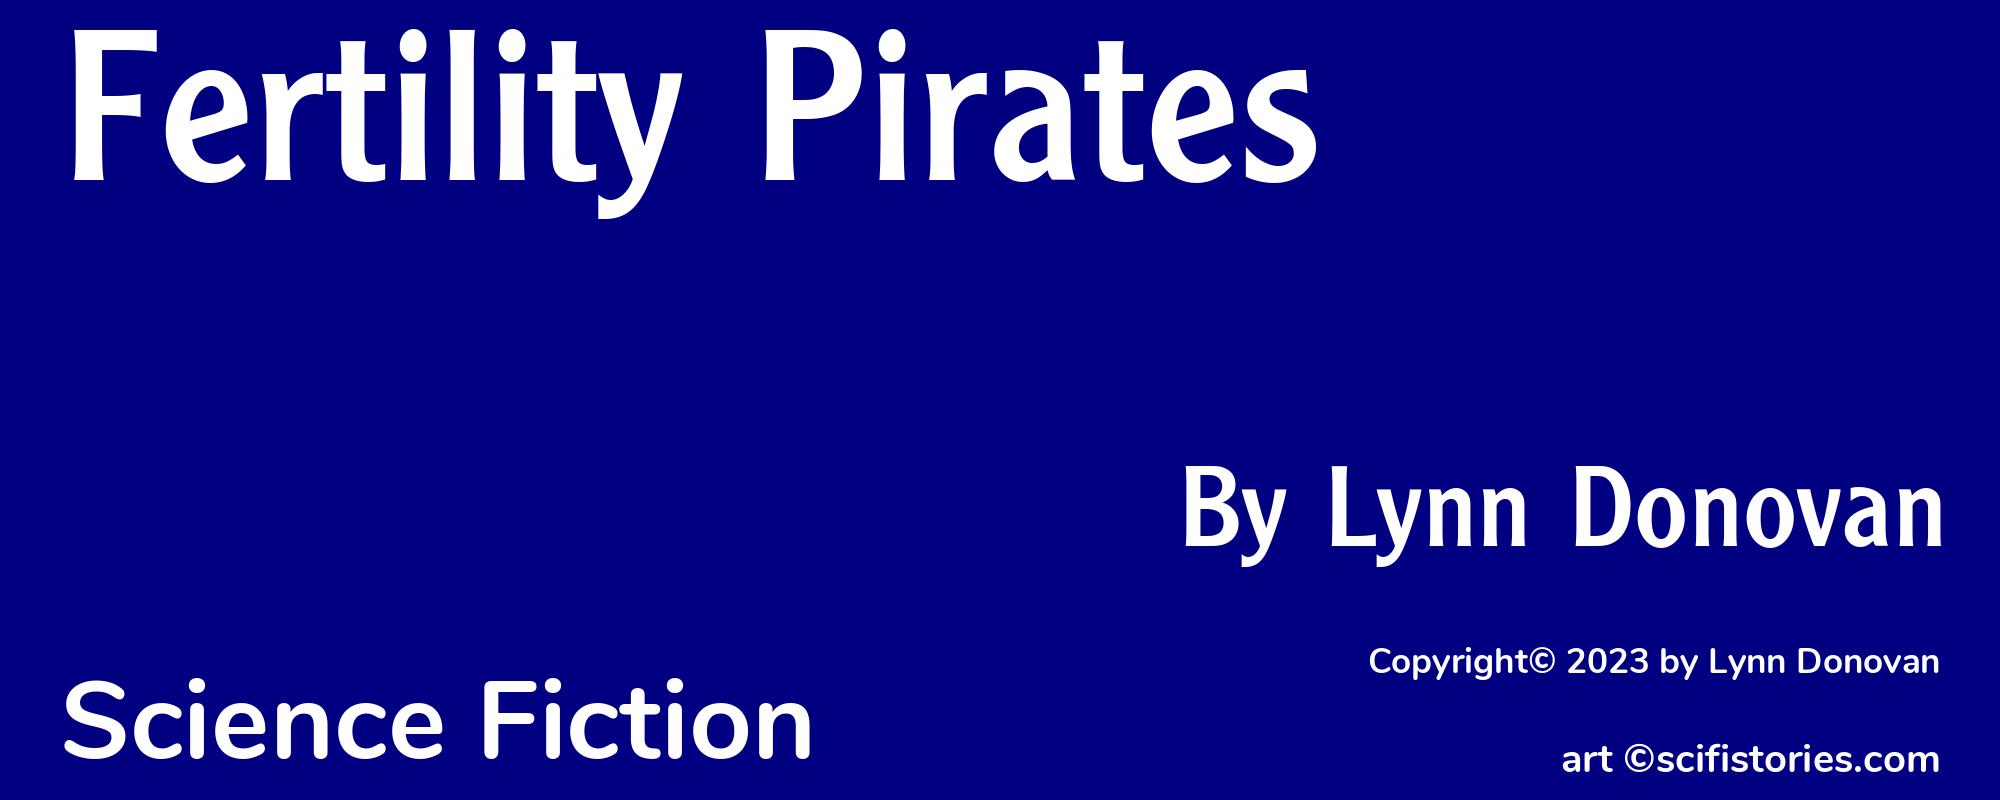 Fertility Pirates - Cover